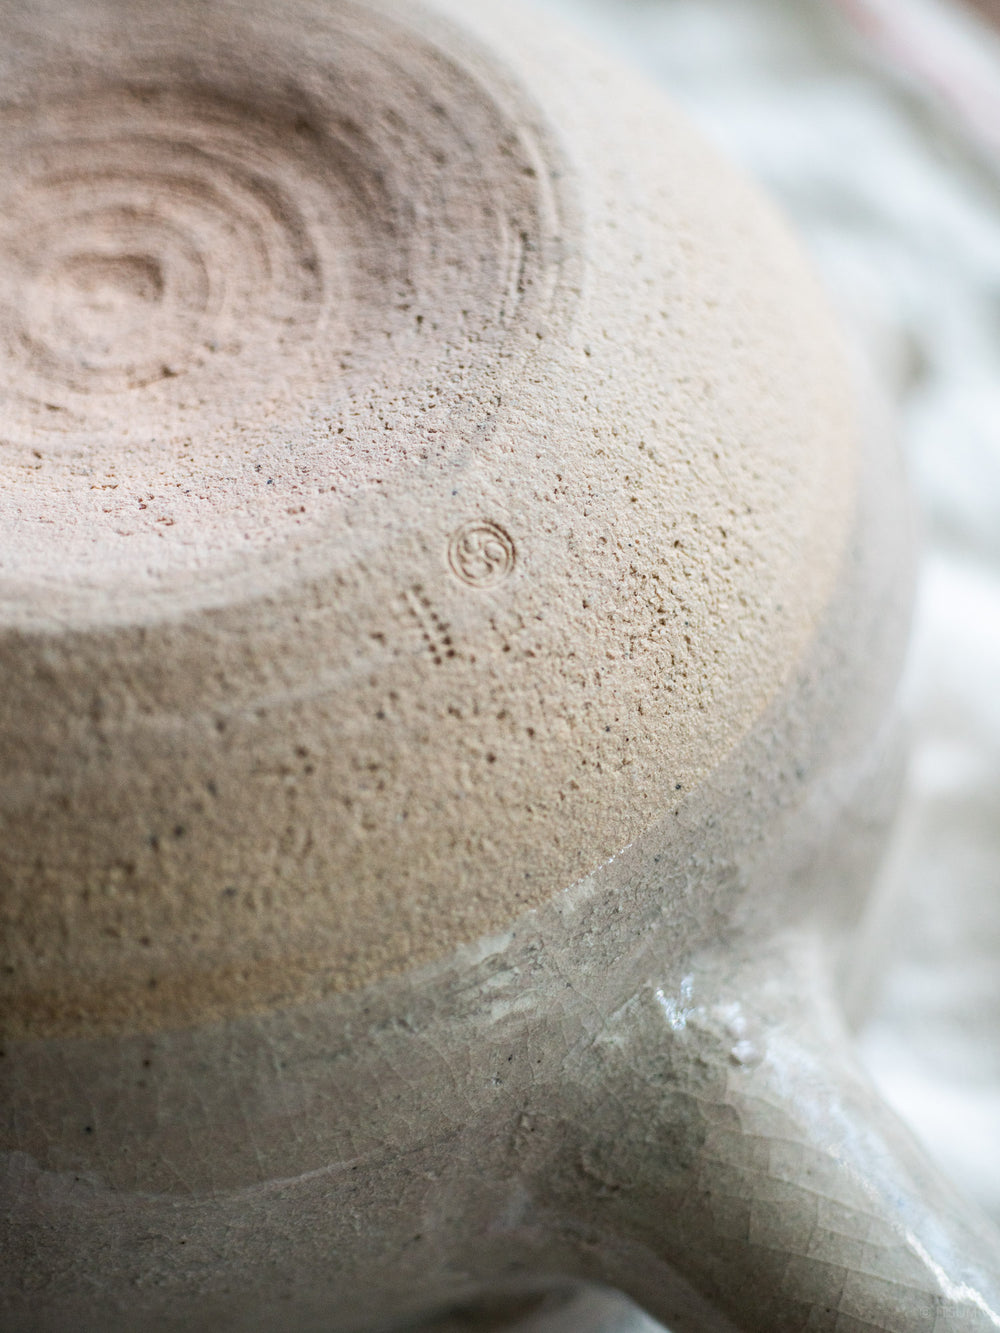 Bottom of Azmaya's iga yukihira pot in sekkai glaze showing an unglazed bottom with ceramic stamp